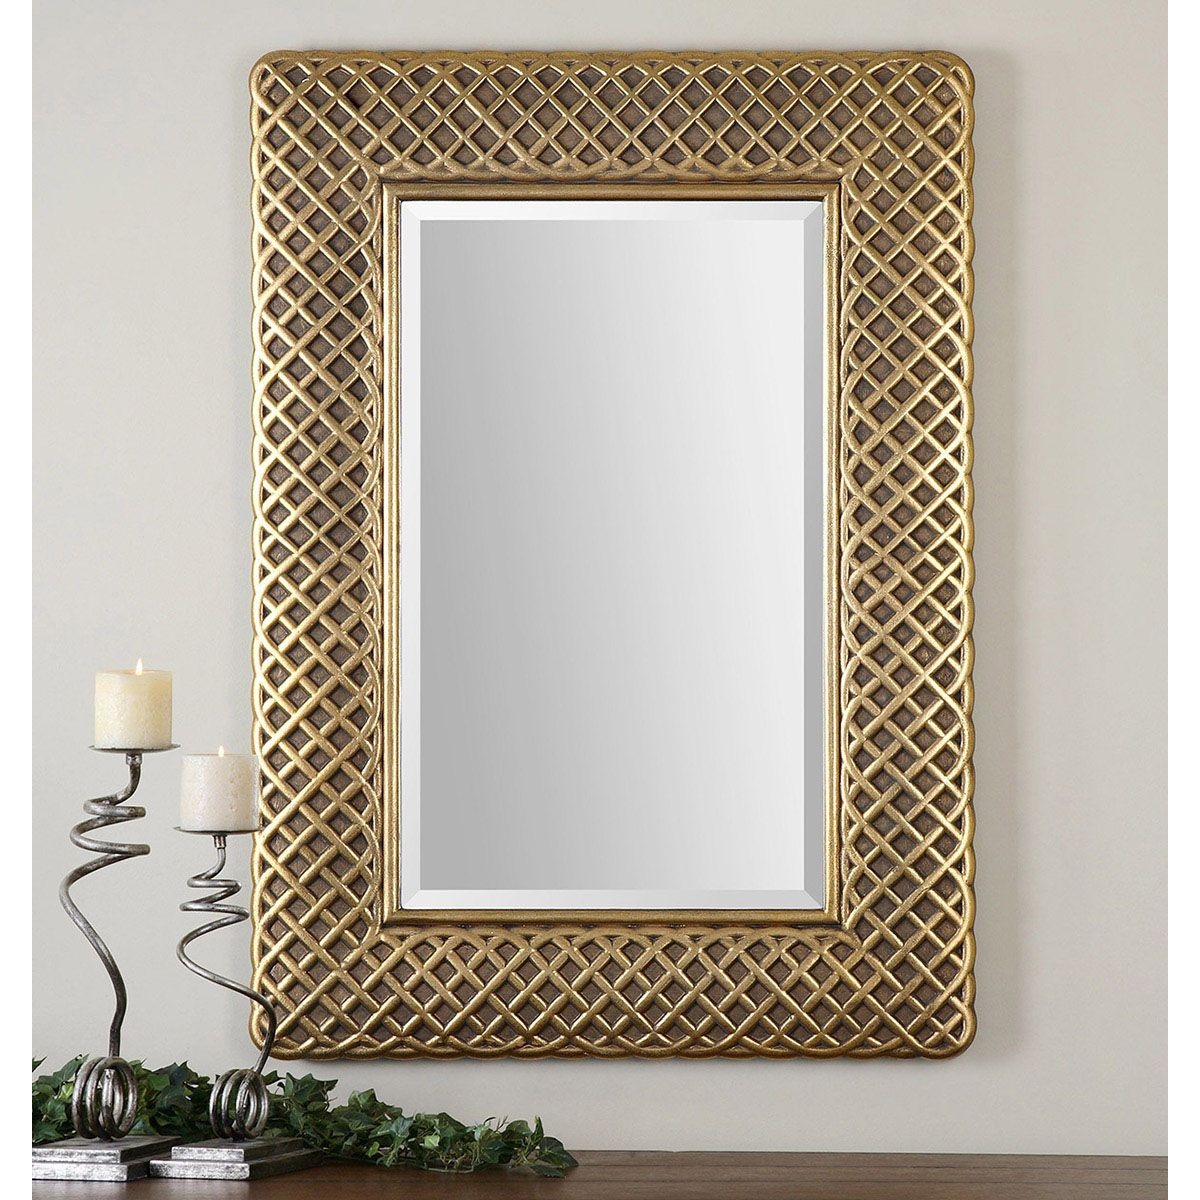 Criss cross gold leaf beveled wall mirror large 42 rectangular